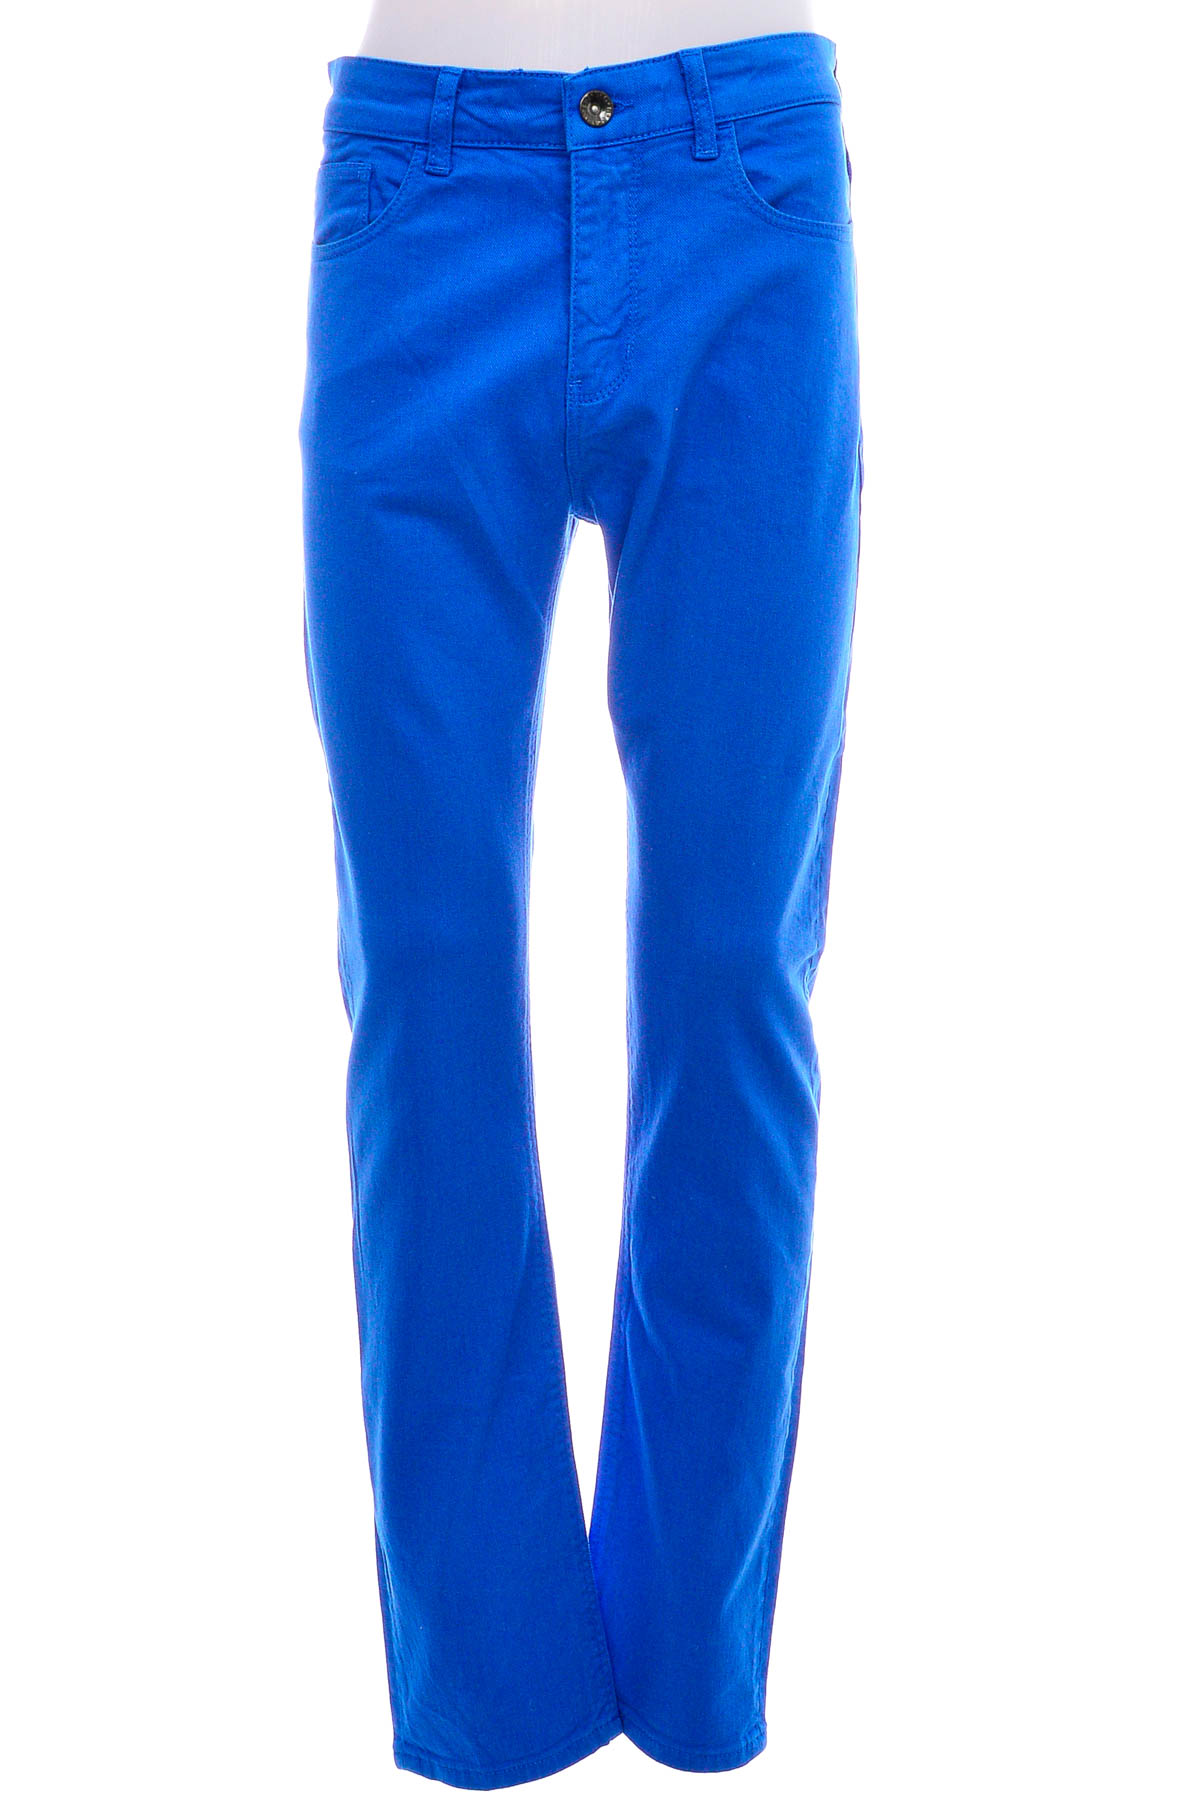 Men's jeans - United Colors of Benetton - 0